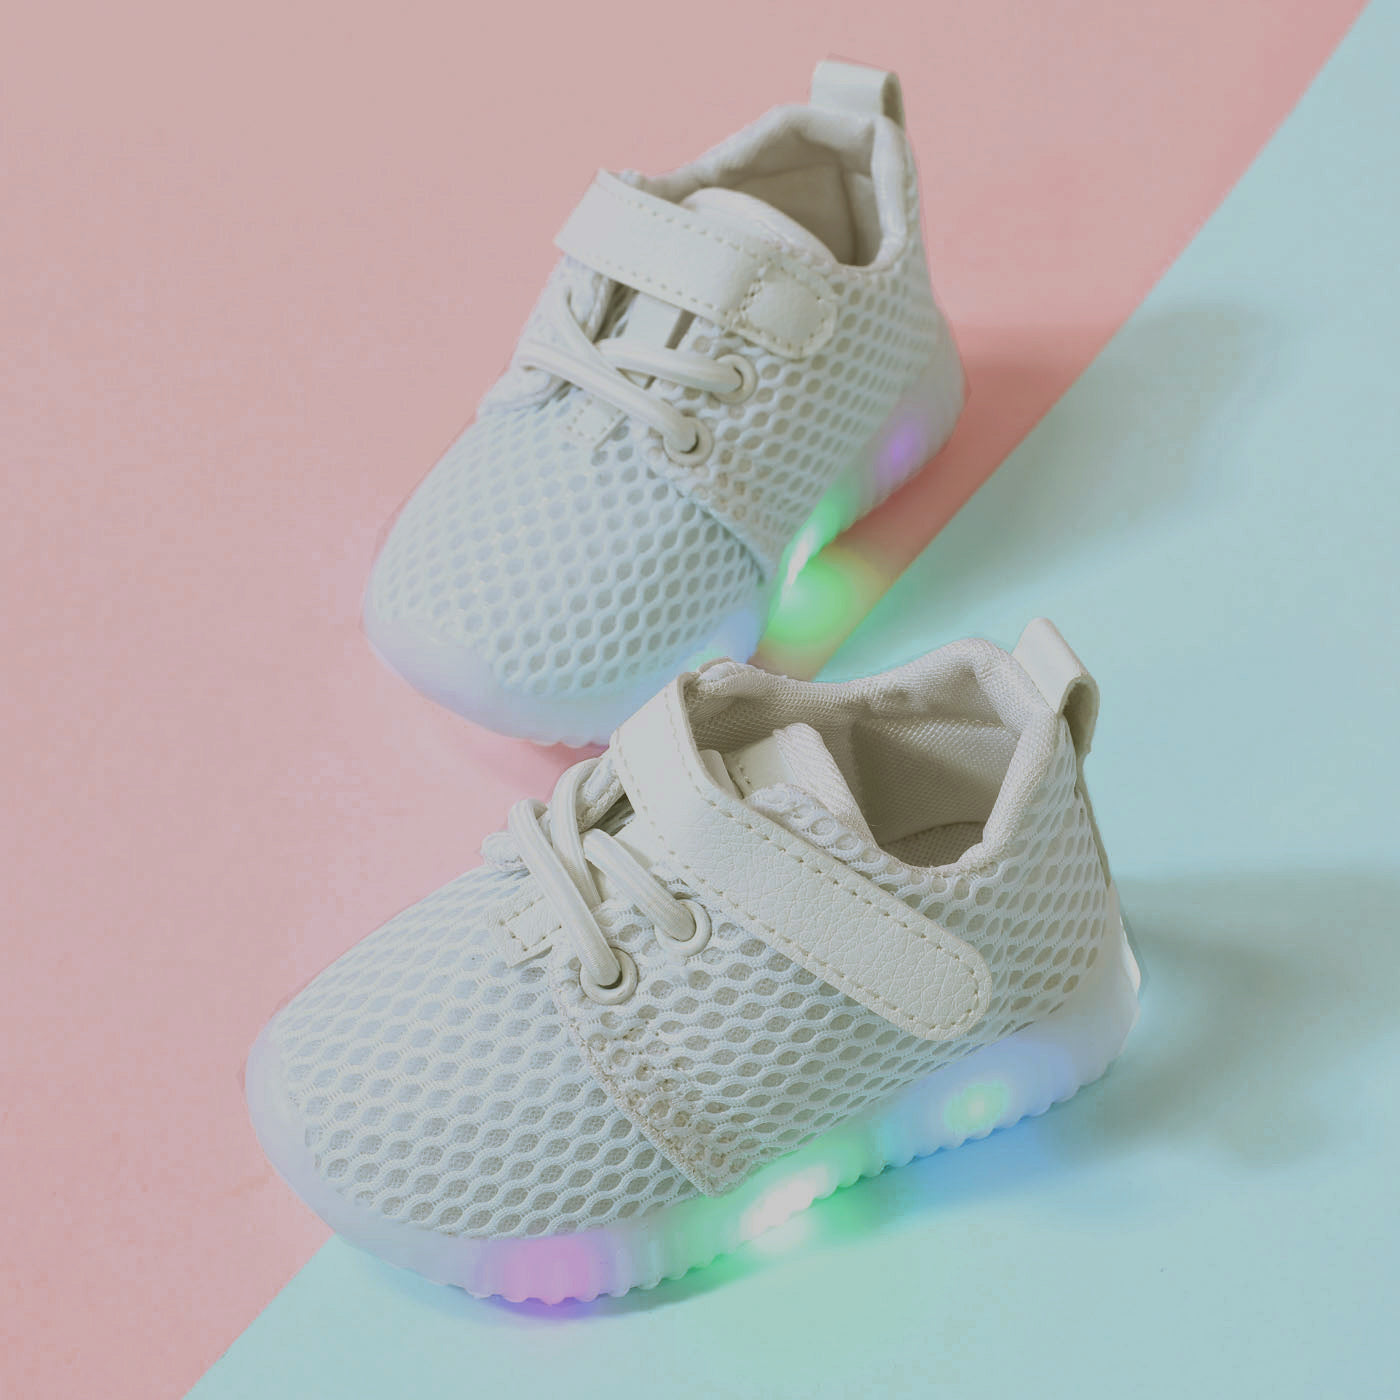 Unisex Kids’ Fashion Sneakers: White, Glow-in-the-Dark Soles, Easy Hook and Loop Closure